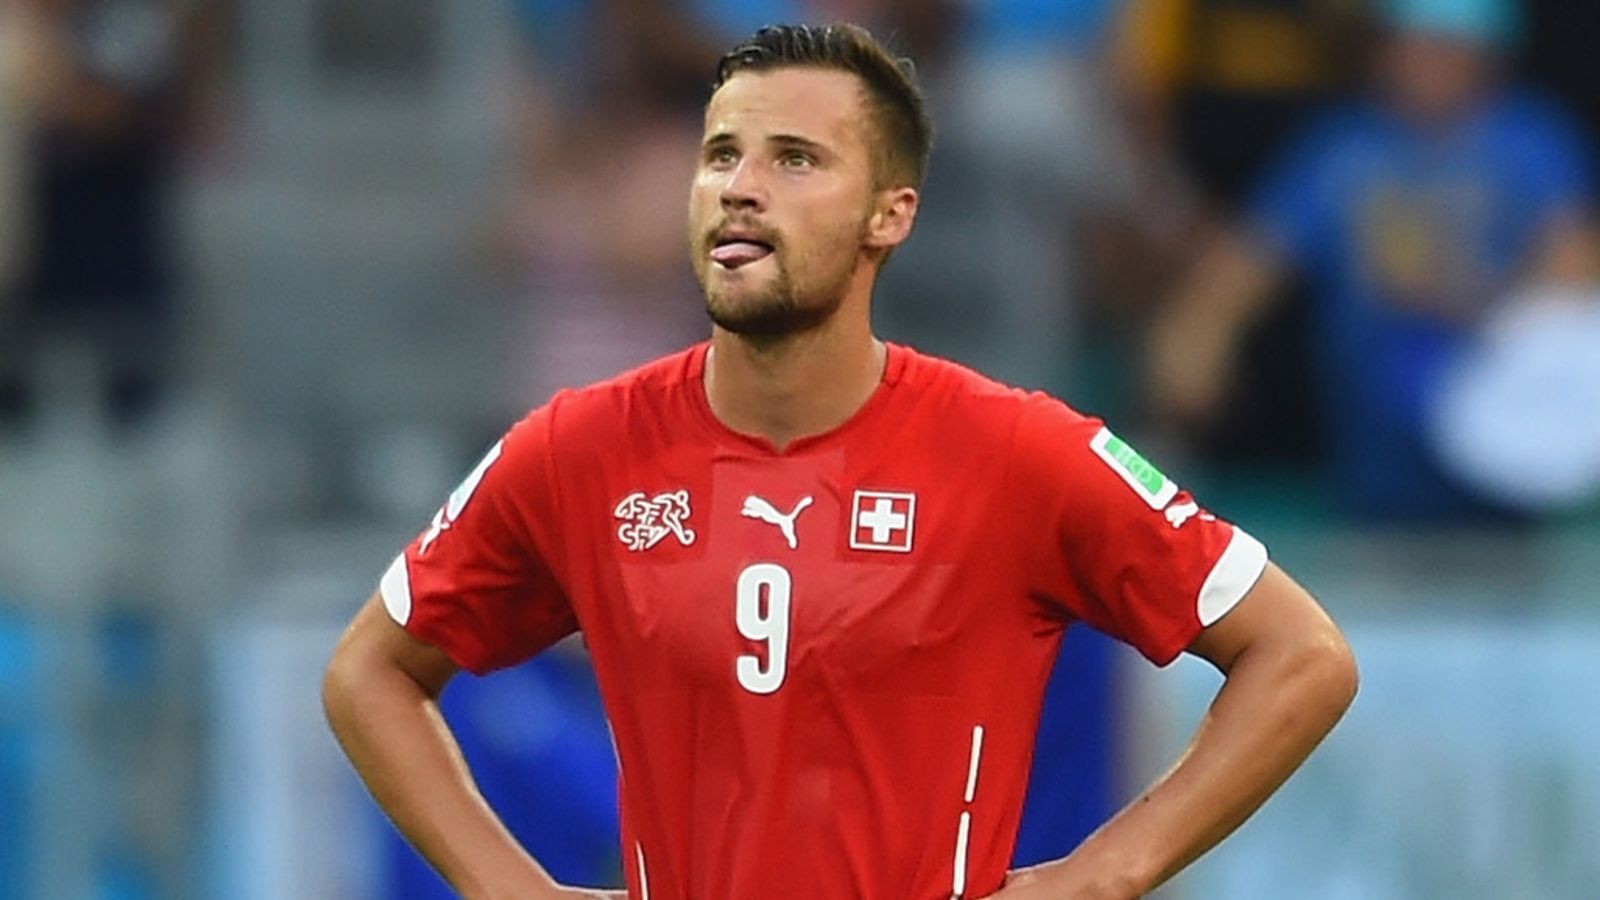 Transfer news: Eintracht Frankfurt sign Switzerland forward Haris Seferovic from Real Sociedad | Football News | Sky Sports